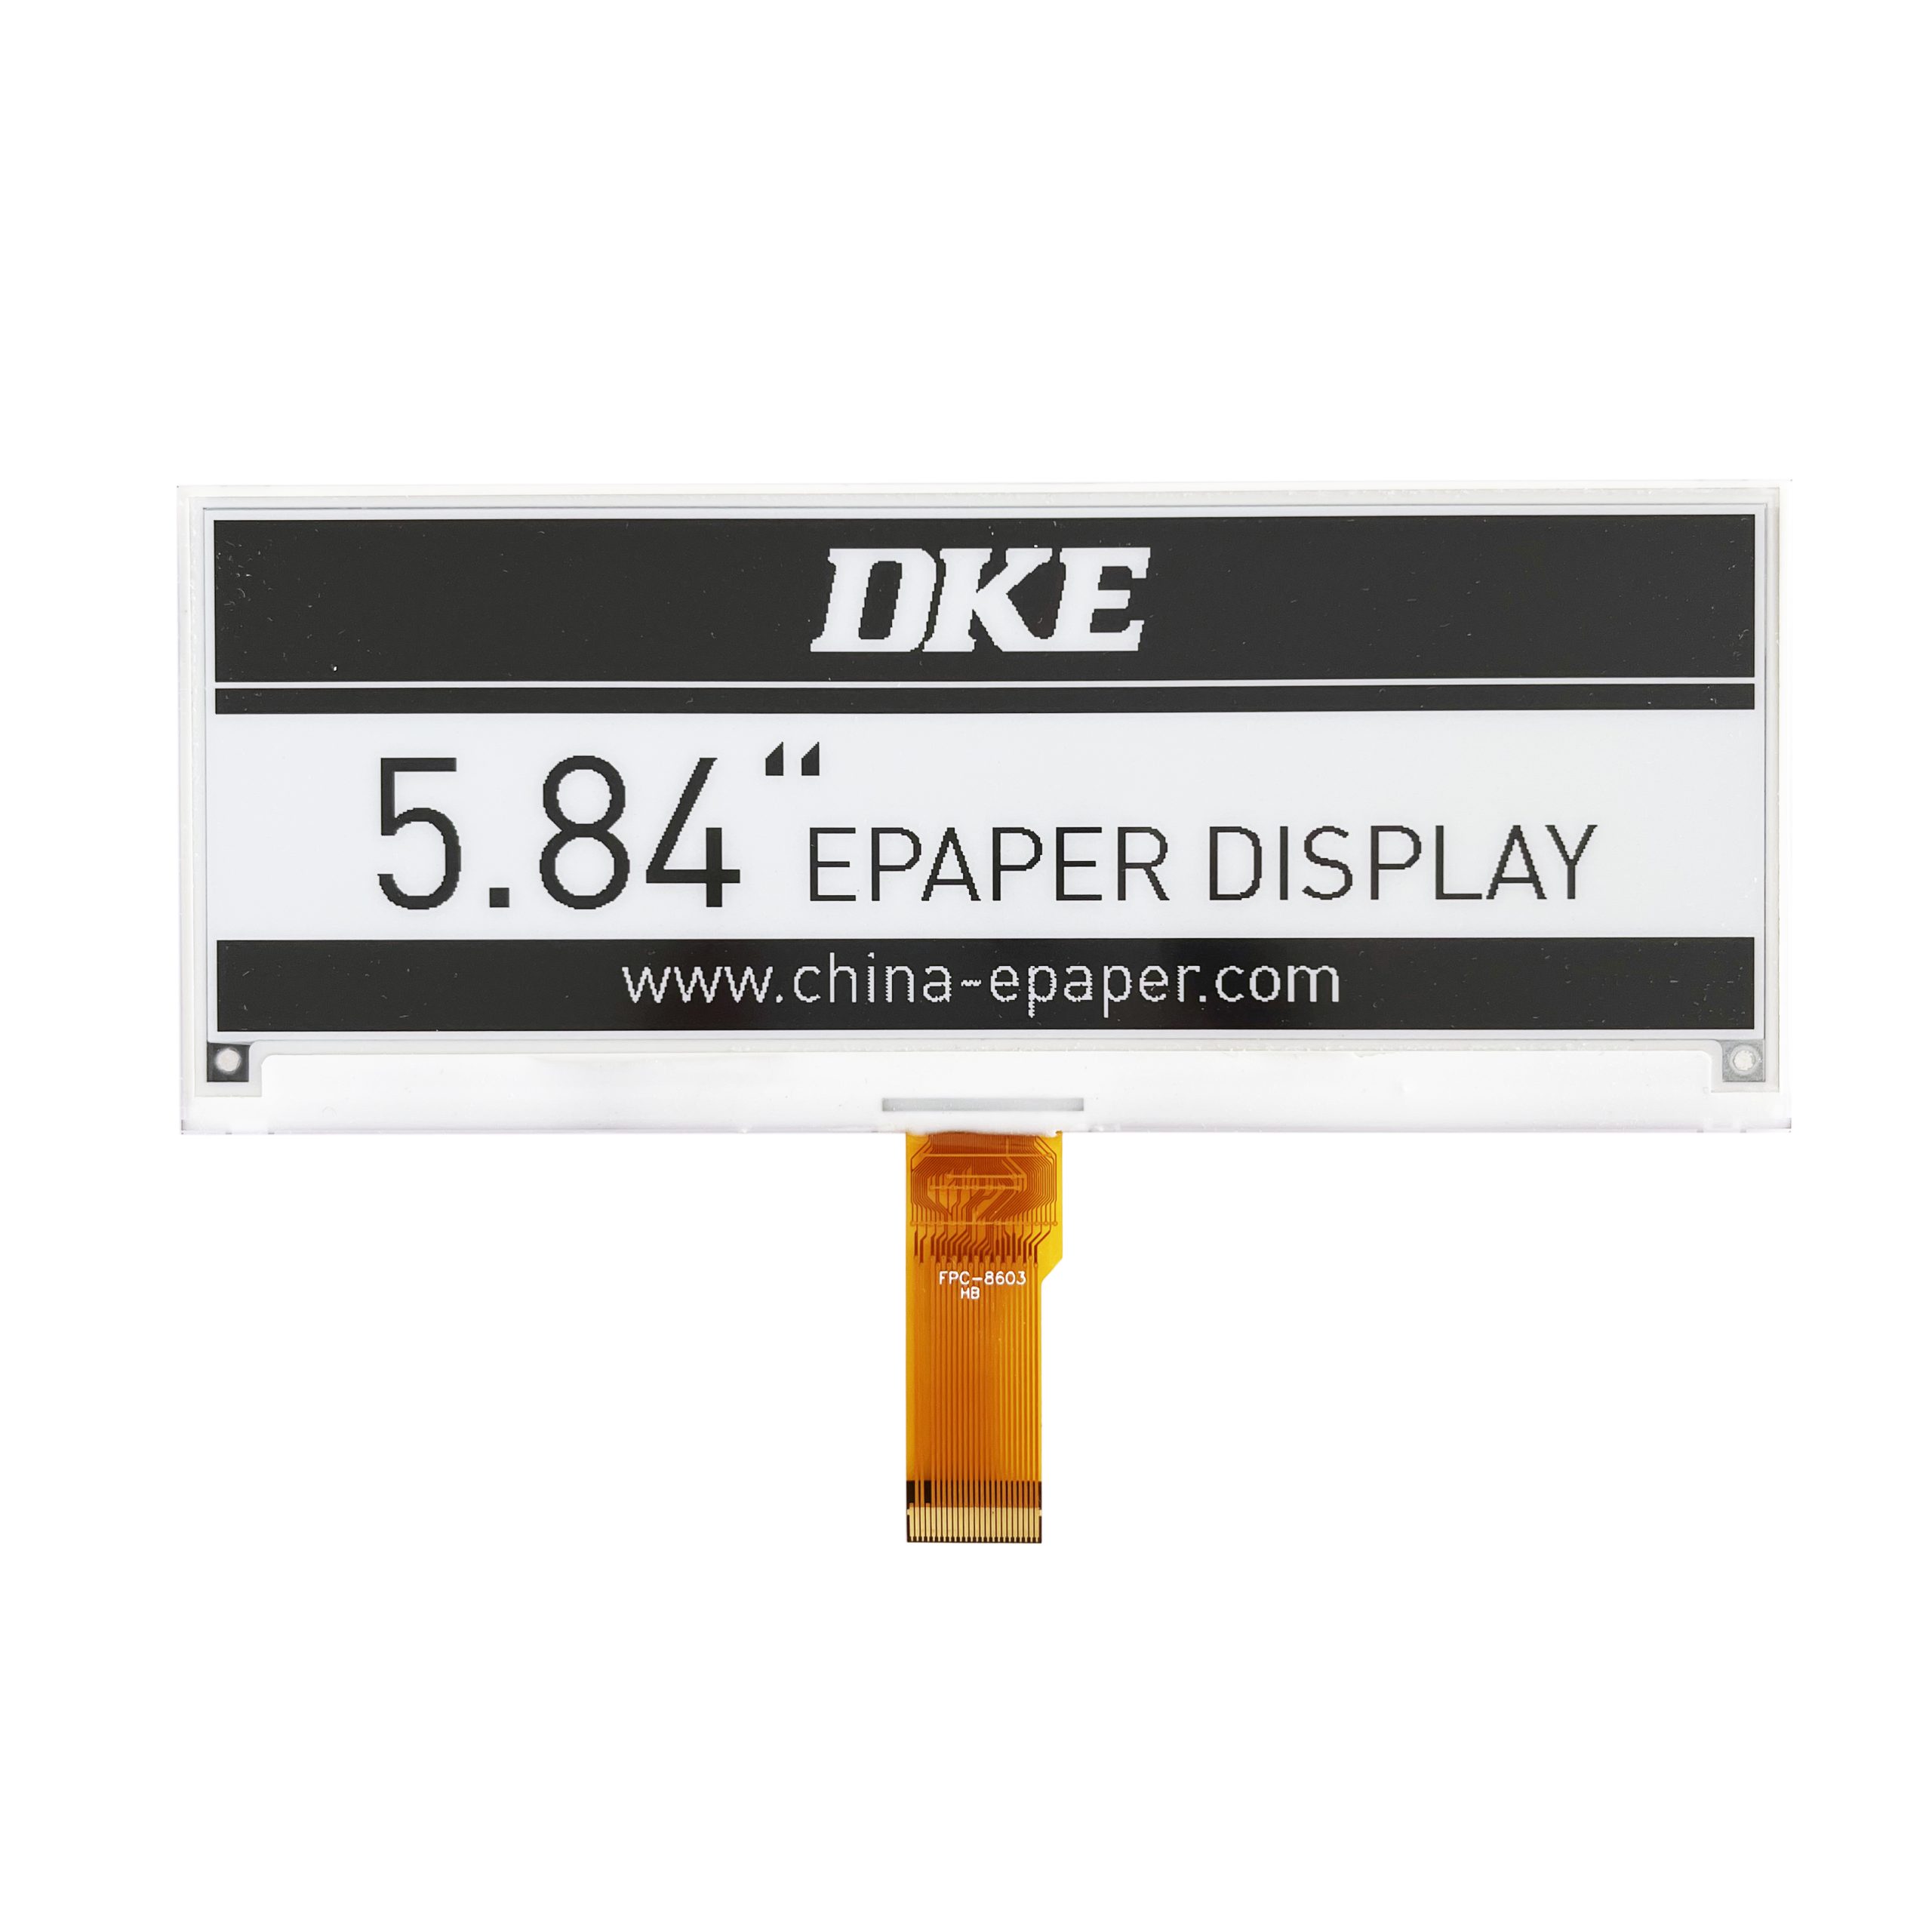 DKE 5.84 Inch Epaper Display